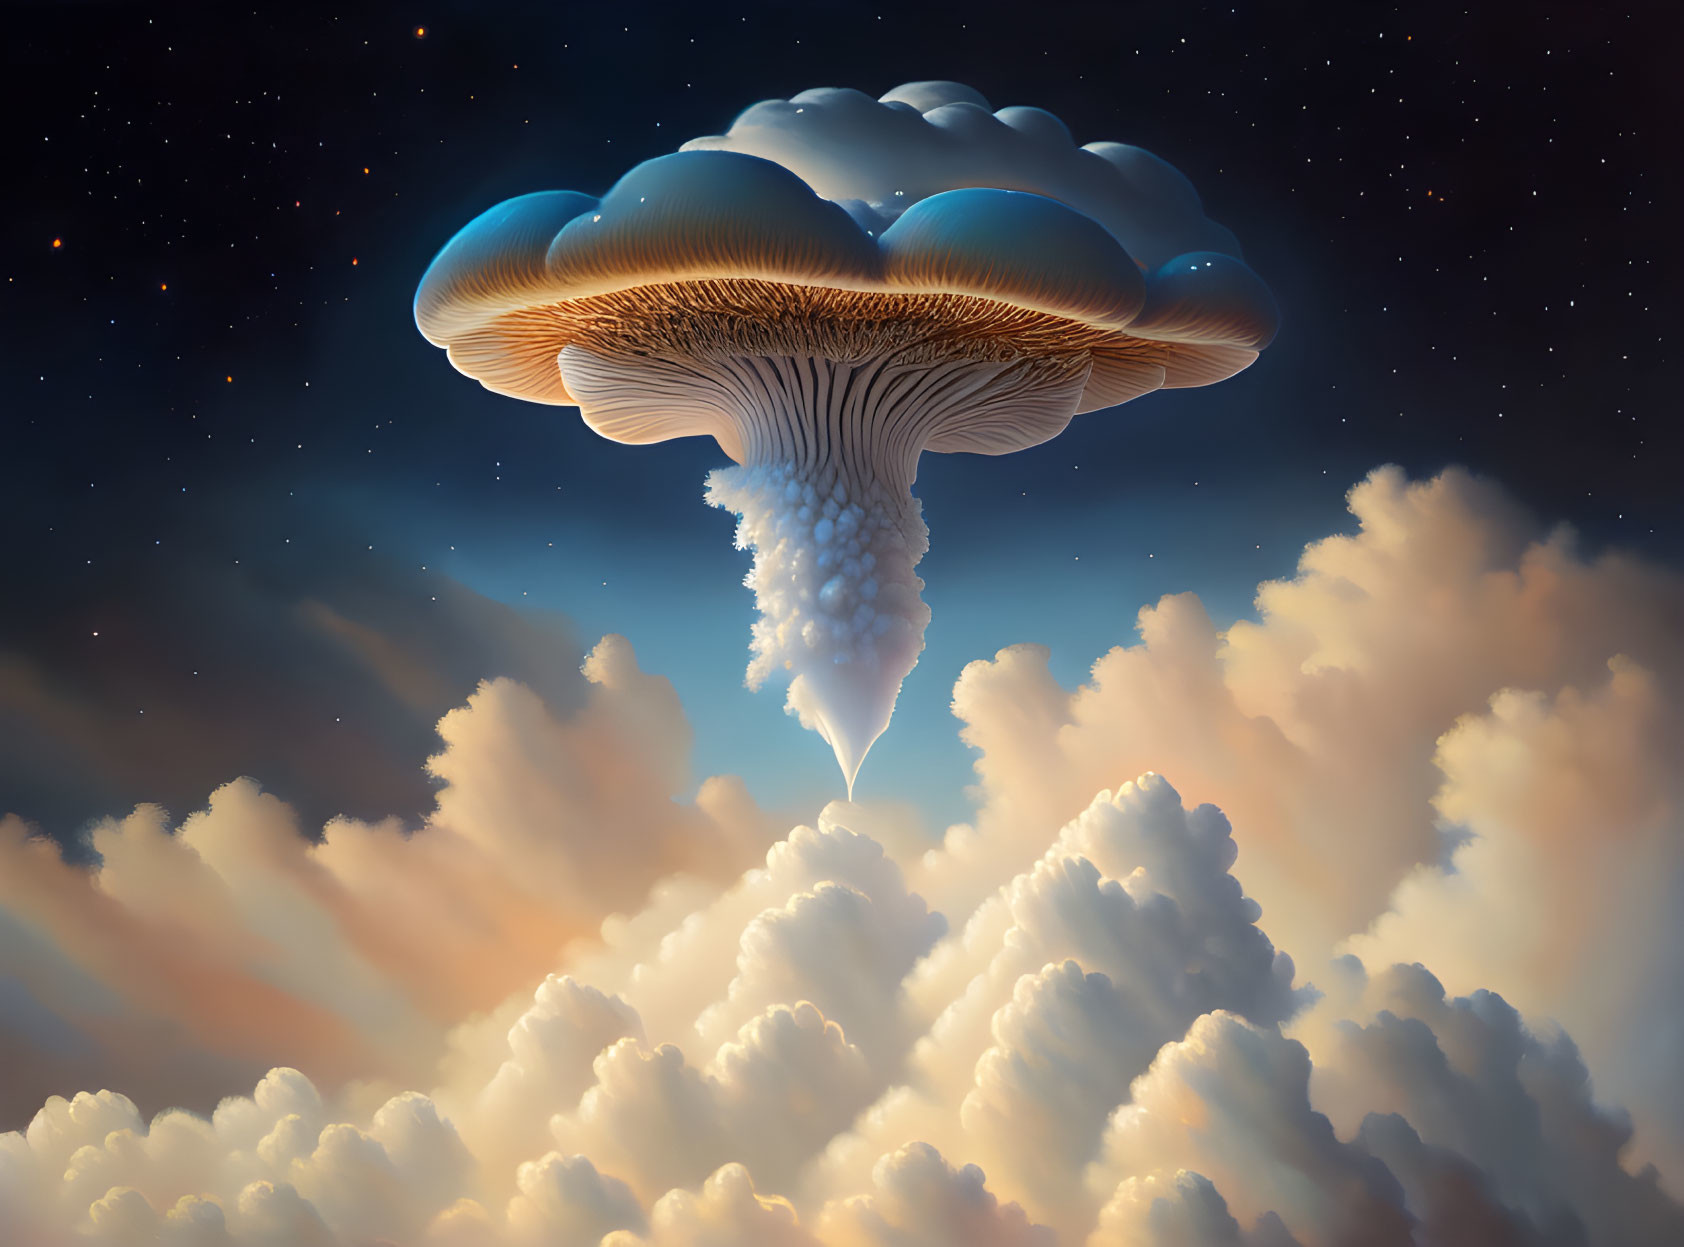 Digital artwork: Mushroom cloud like jellyfish in starry sky with fluffy clouds